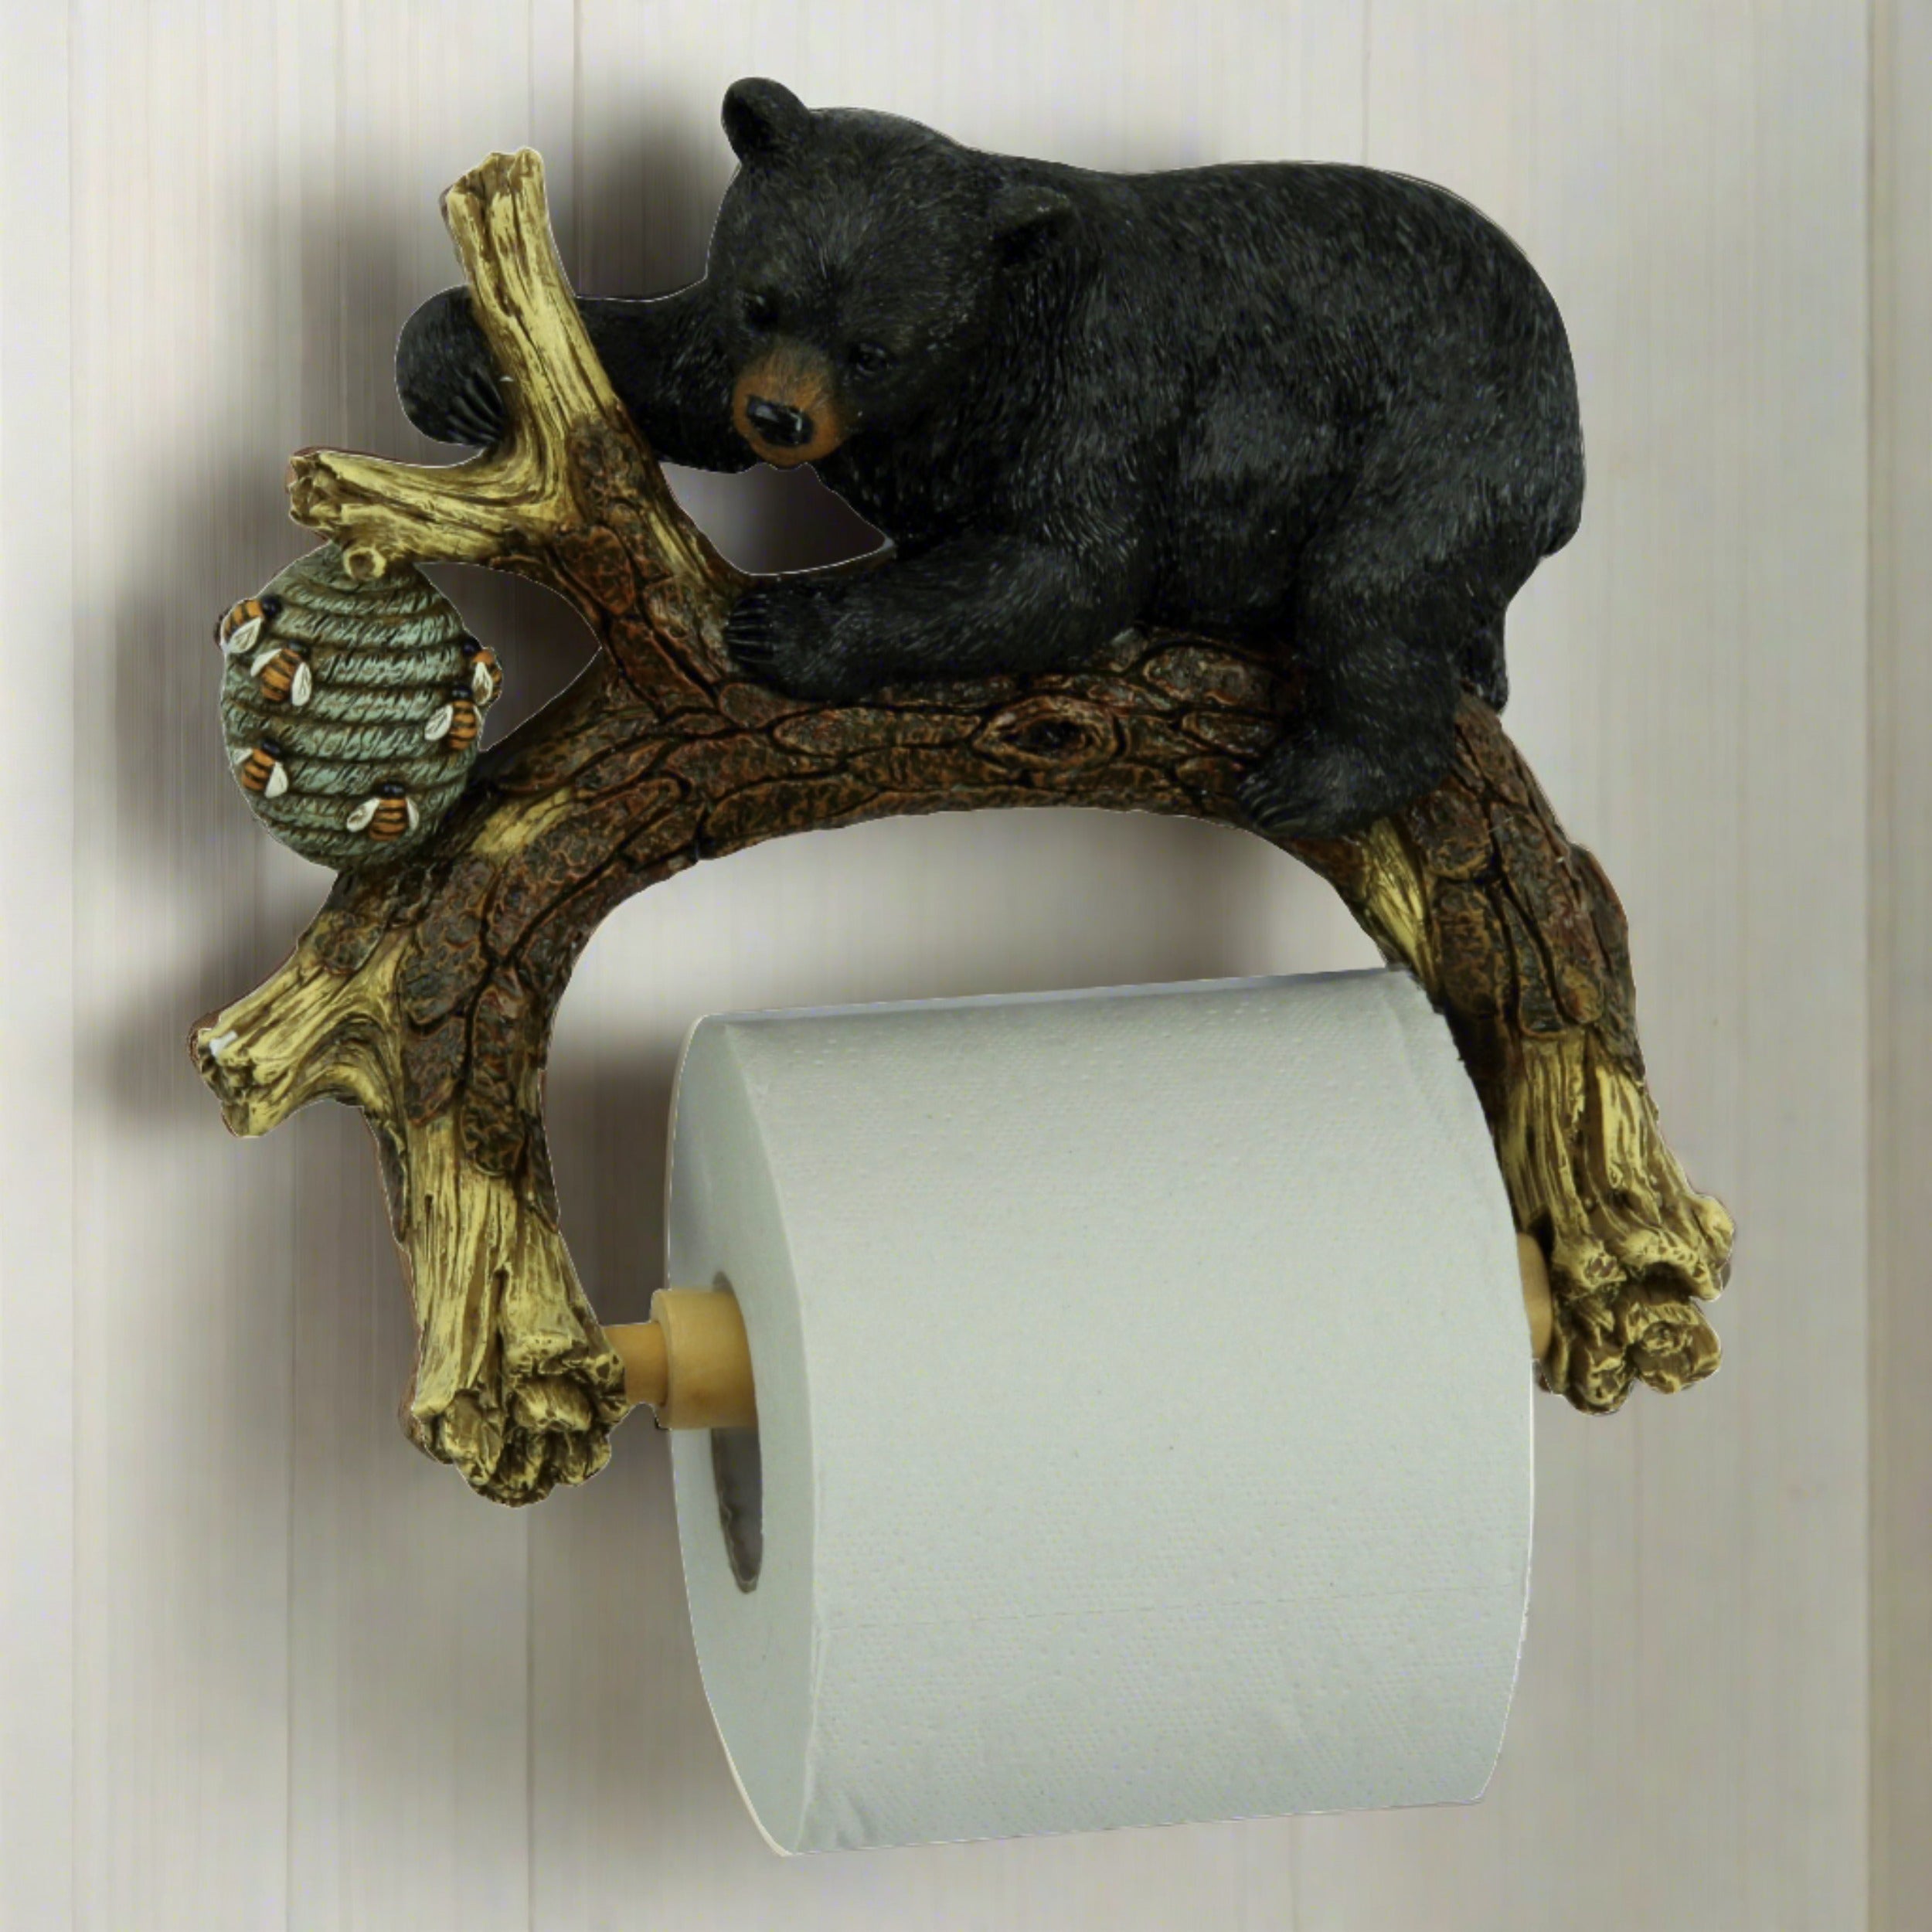 Black Bear Paper Towel Holder - Cabin Kitchen Accessories Animal